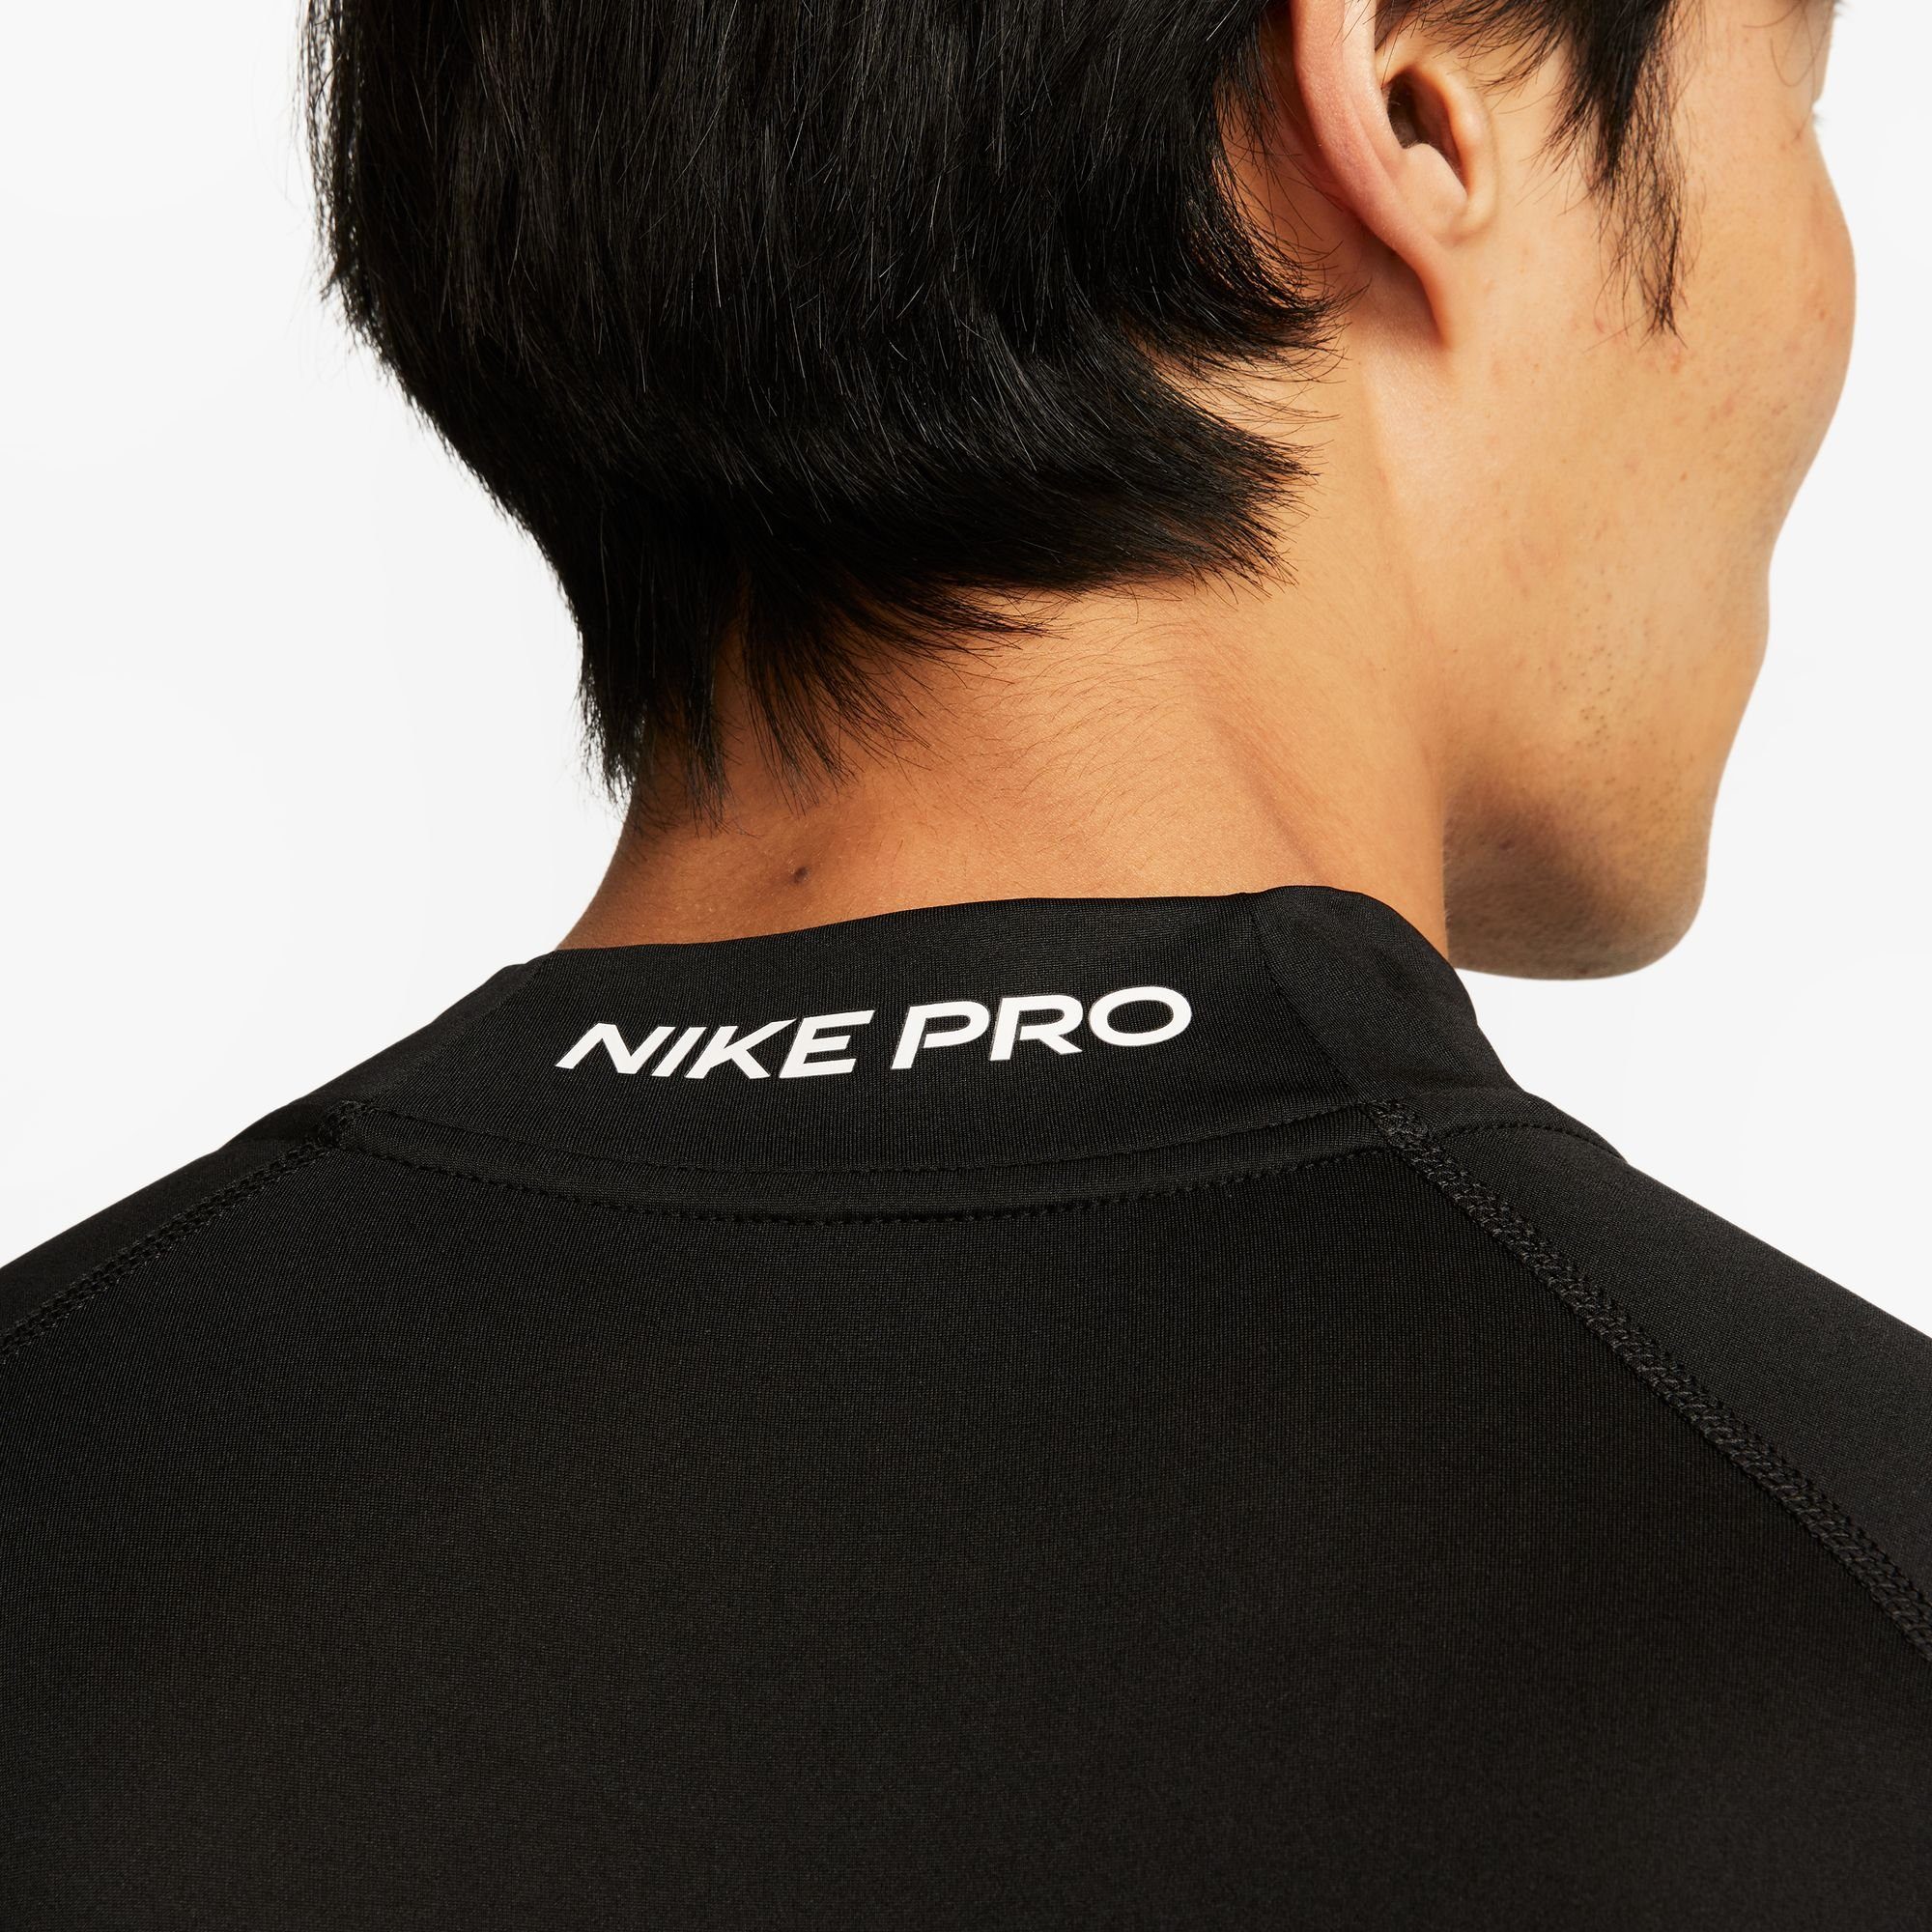 MOCK-NECK Nike TIGHT-FITTING Trainingsshirt PRO TOP MEN'S DRI-FIT LONG-SLEEVE